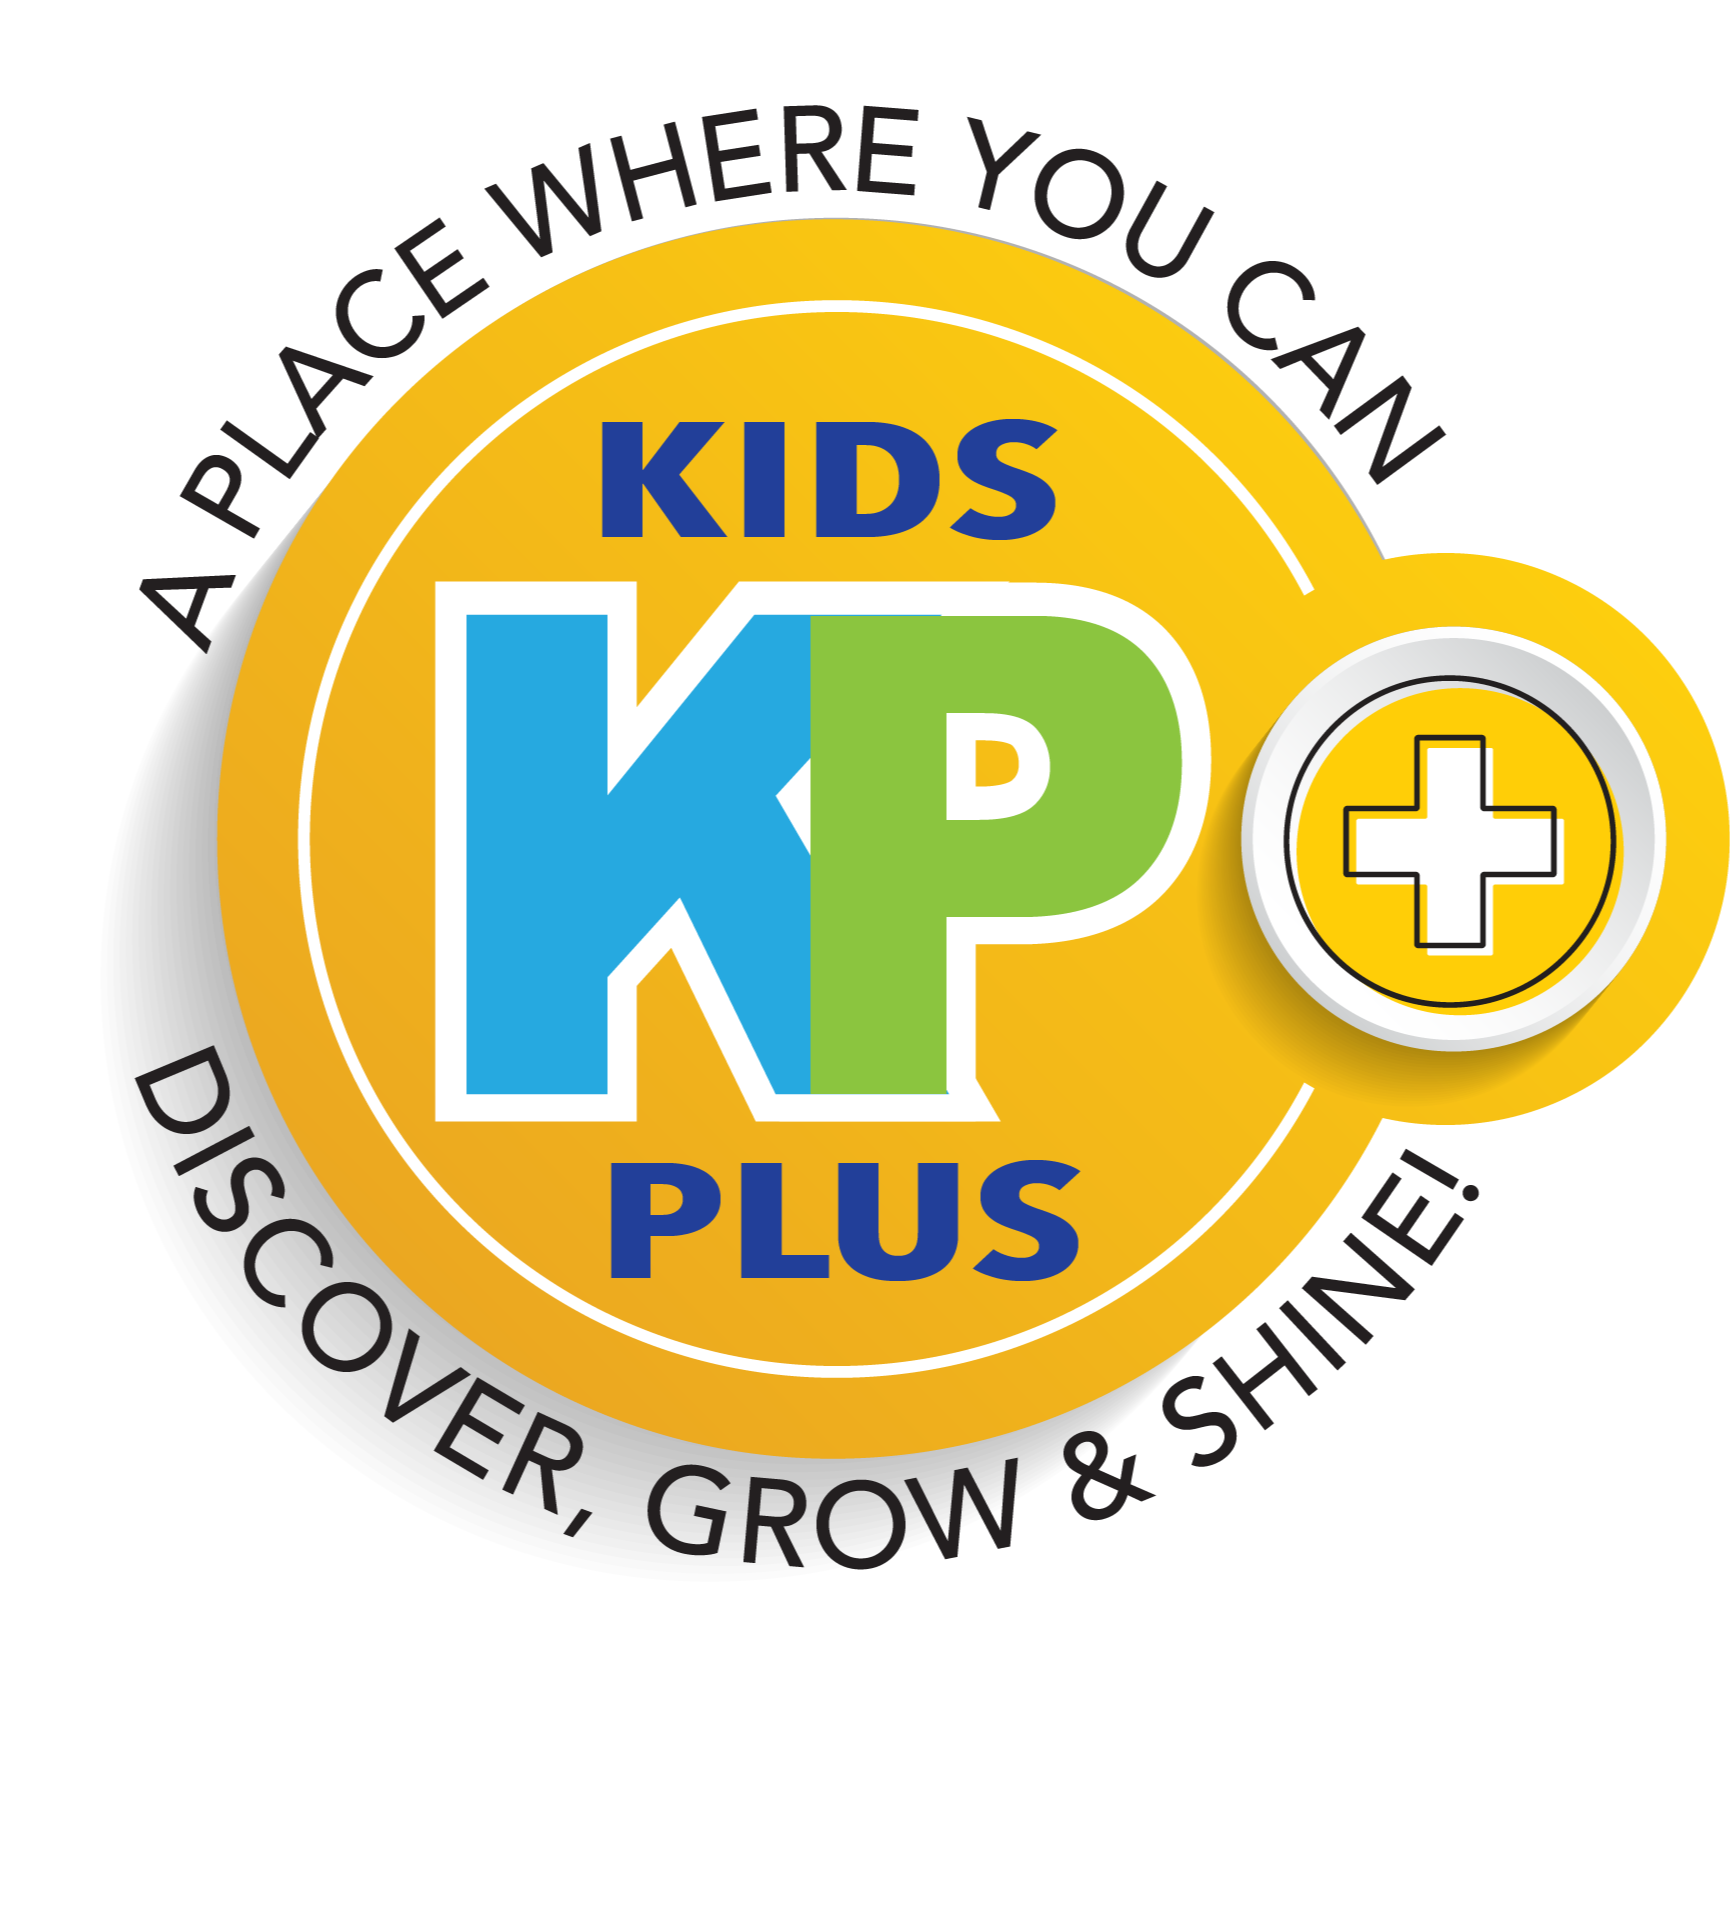 Kids Plus Program logo